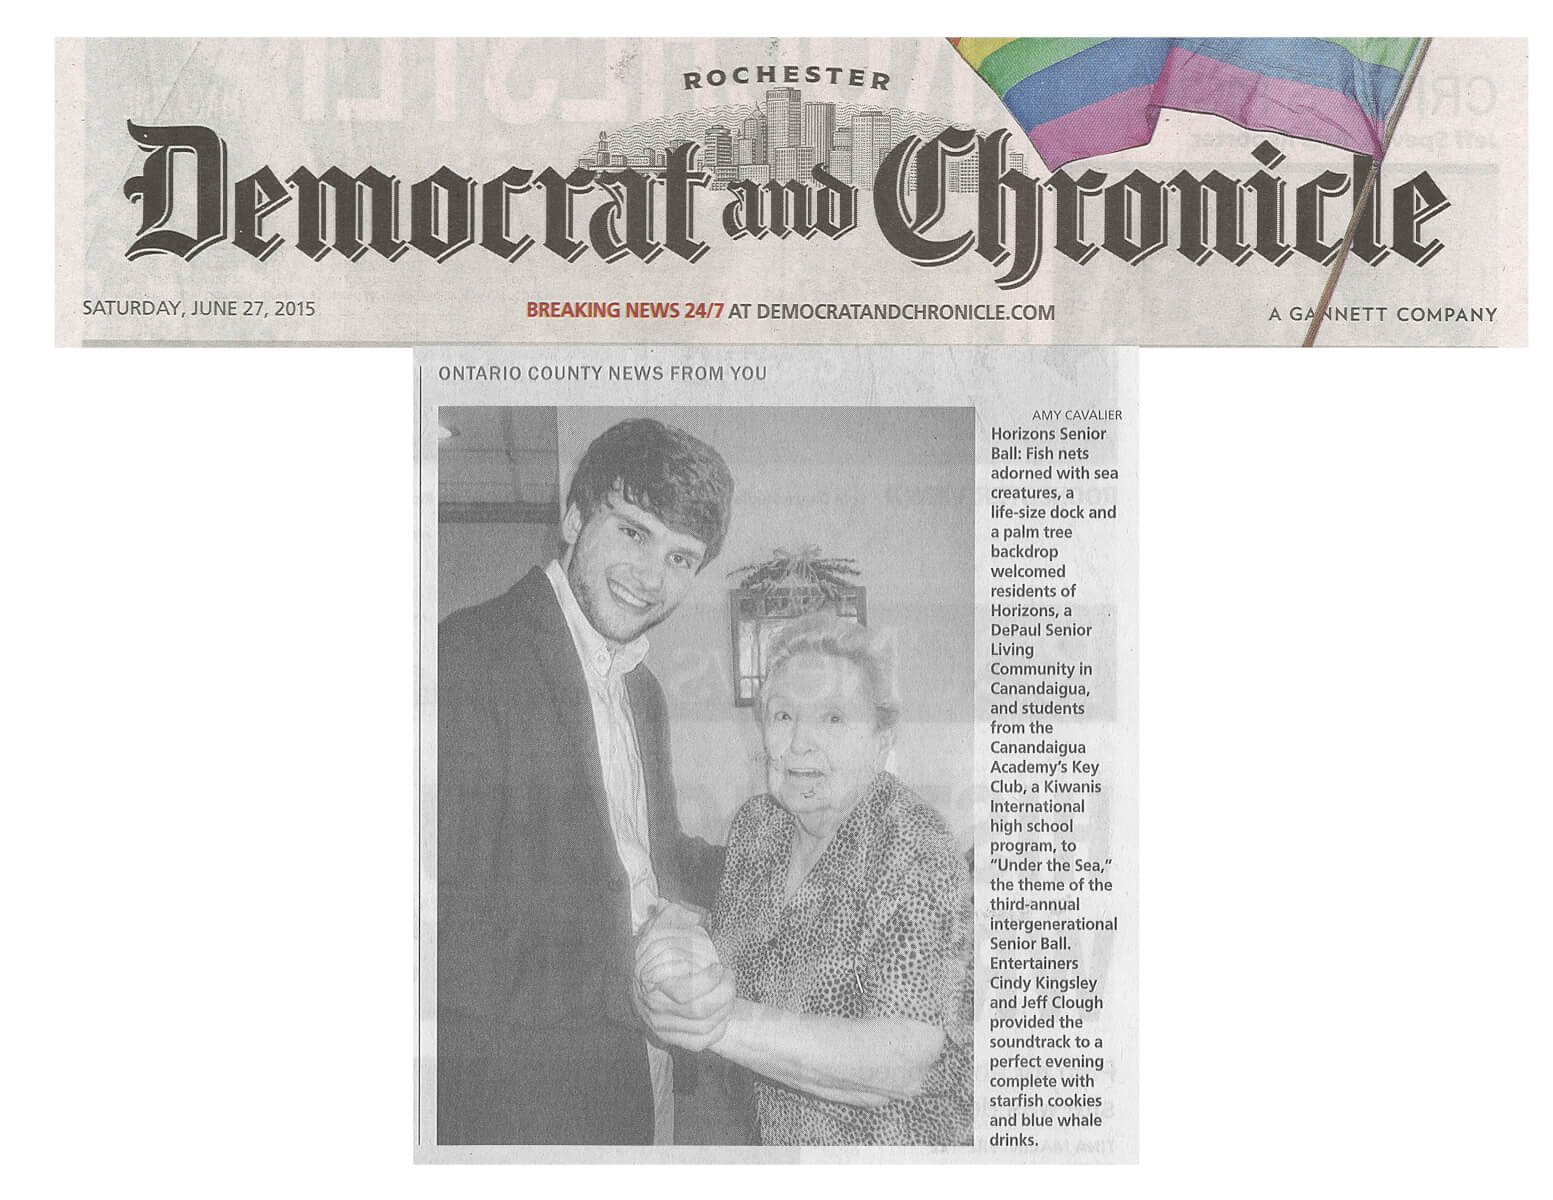 Horizons Senior Ball photo in the Democrat and Chronicle June 27, 2015